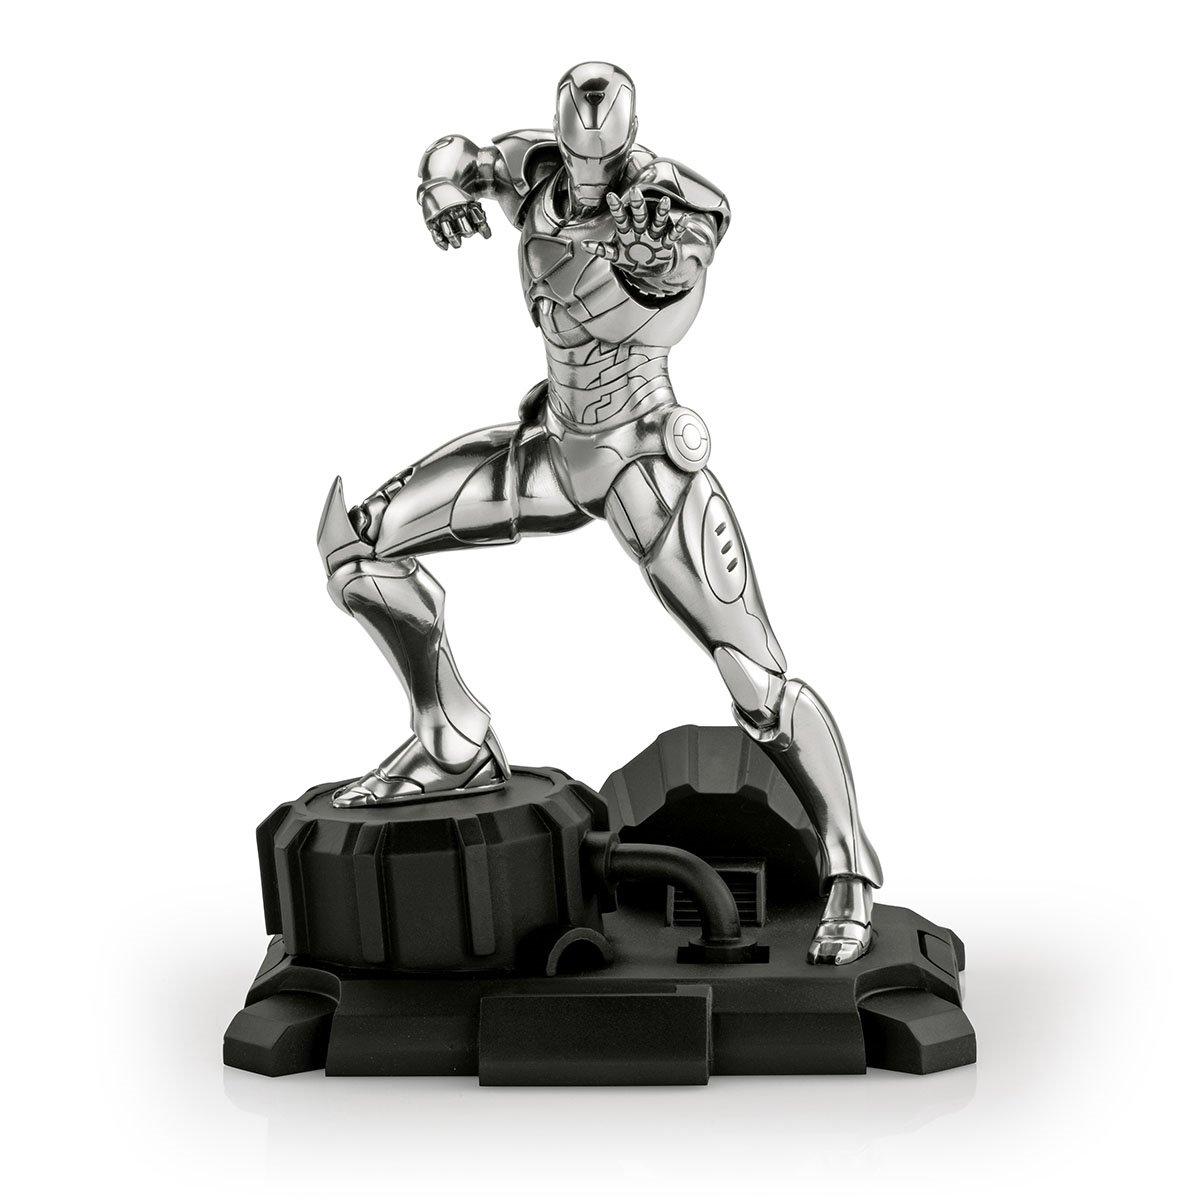 Limited Edition Iron Man Figurine